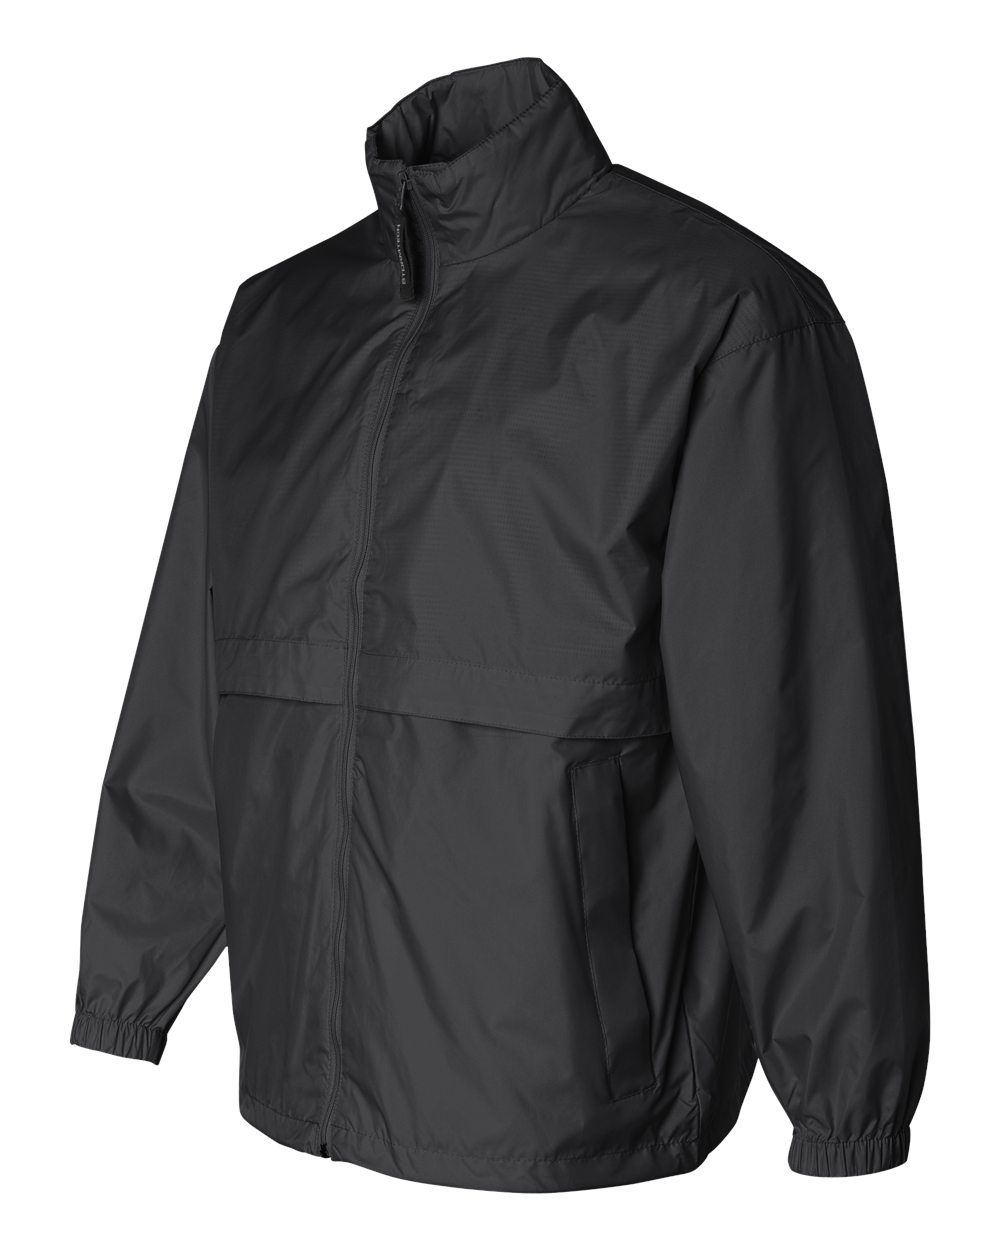 Harriton M750 Packable Nylon Jacket $12.49 - Men's Outerwear